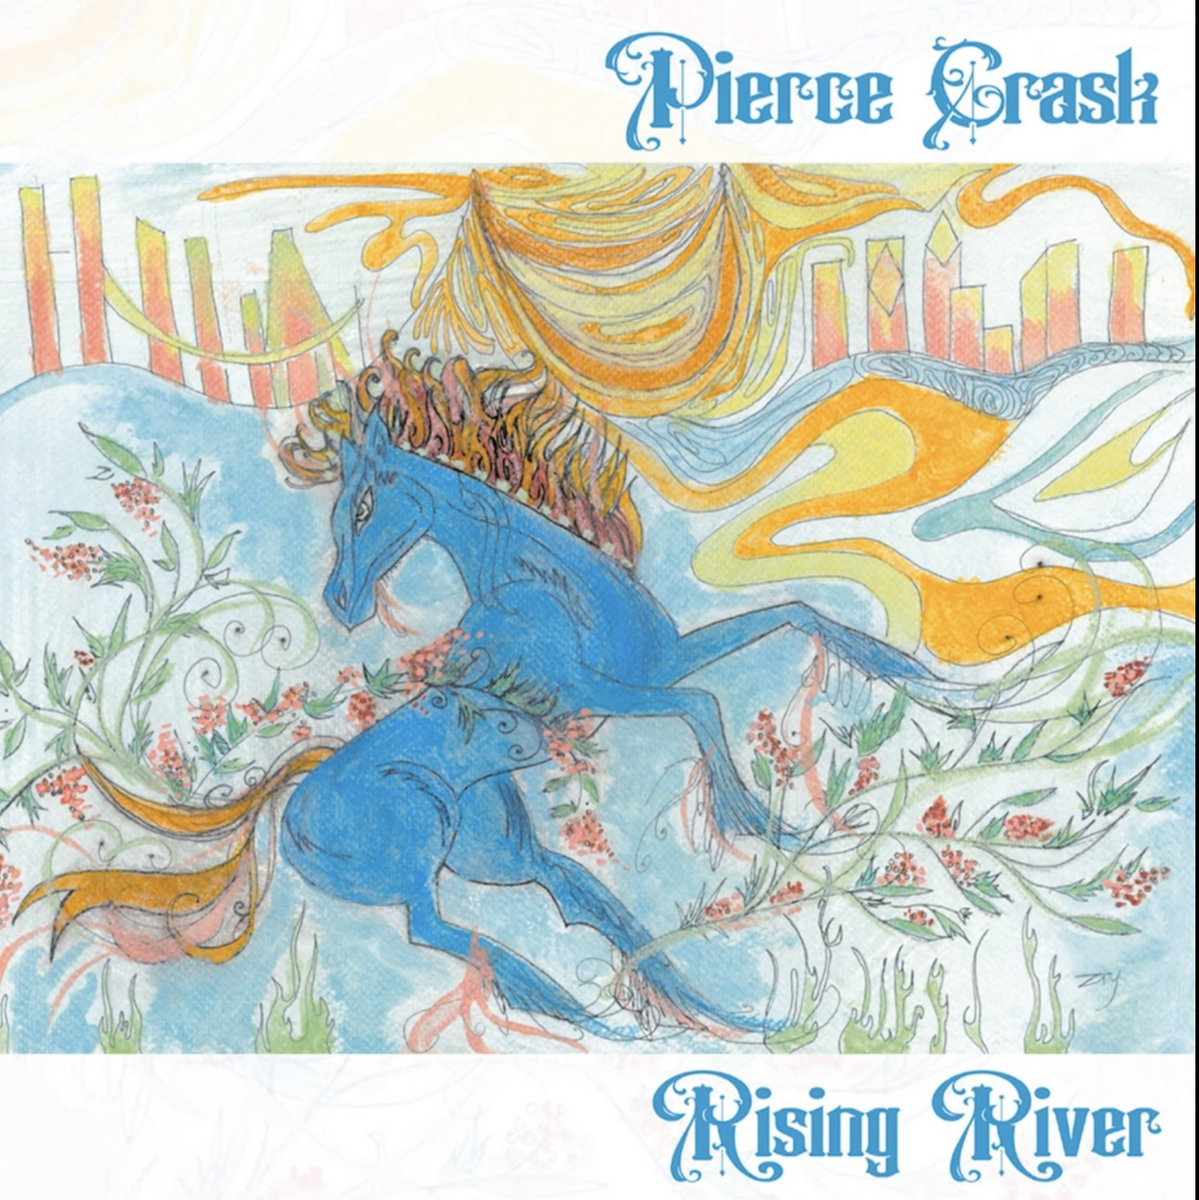 Pierce Crask Rising River